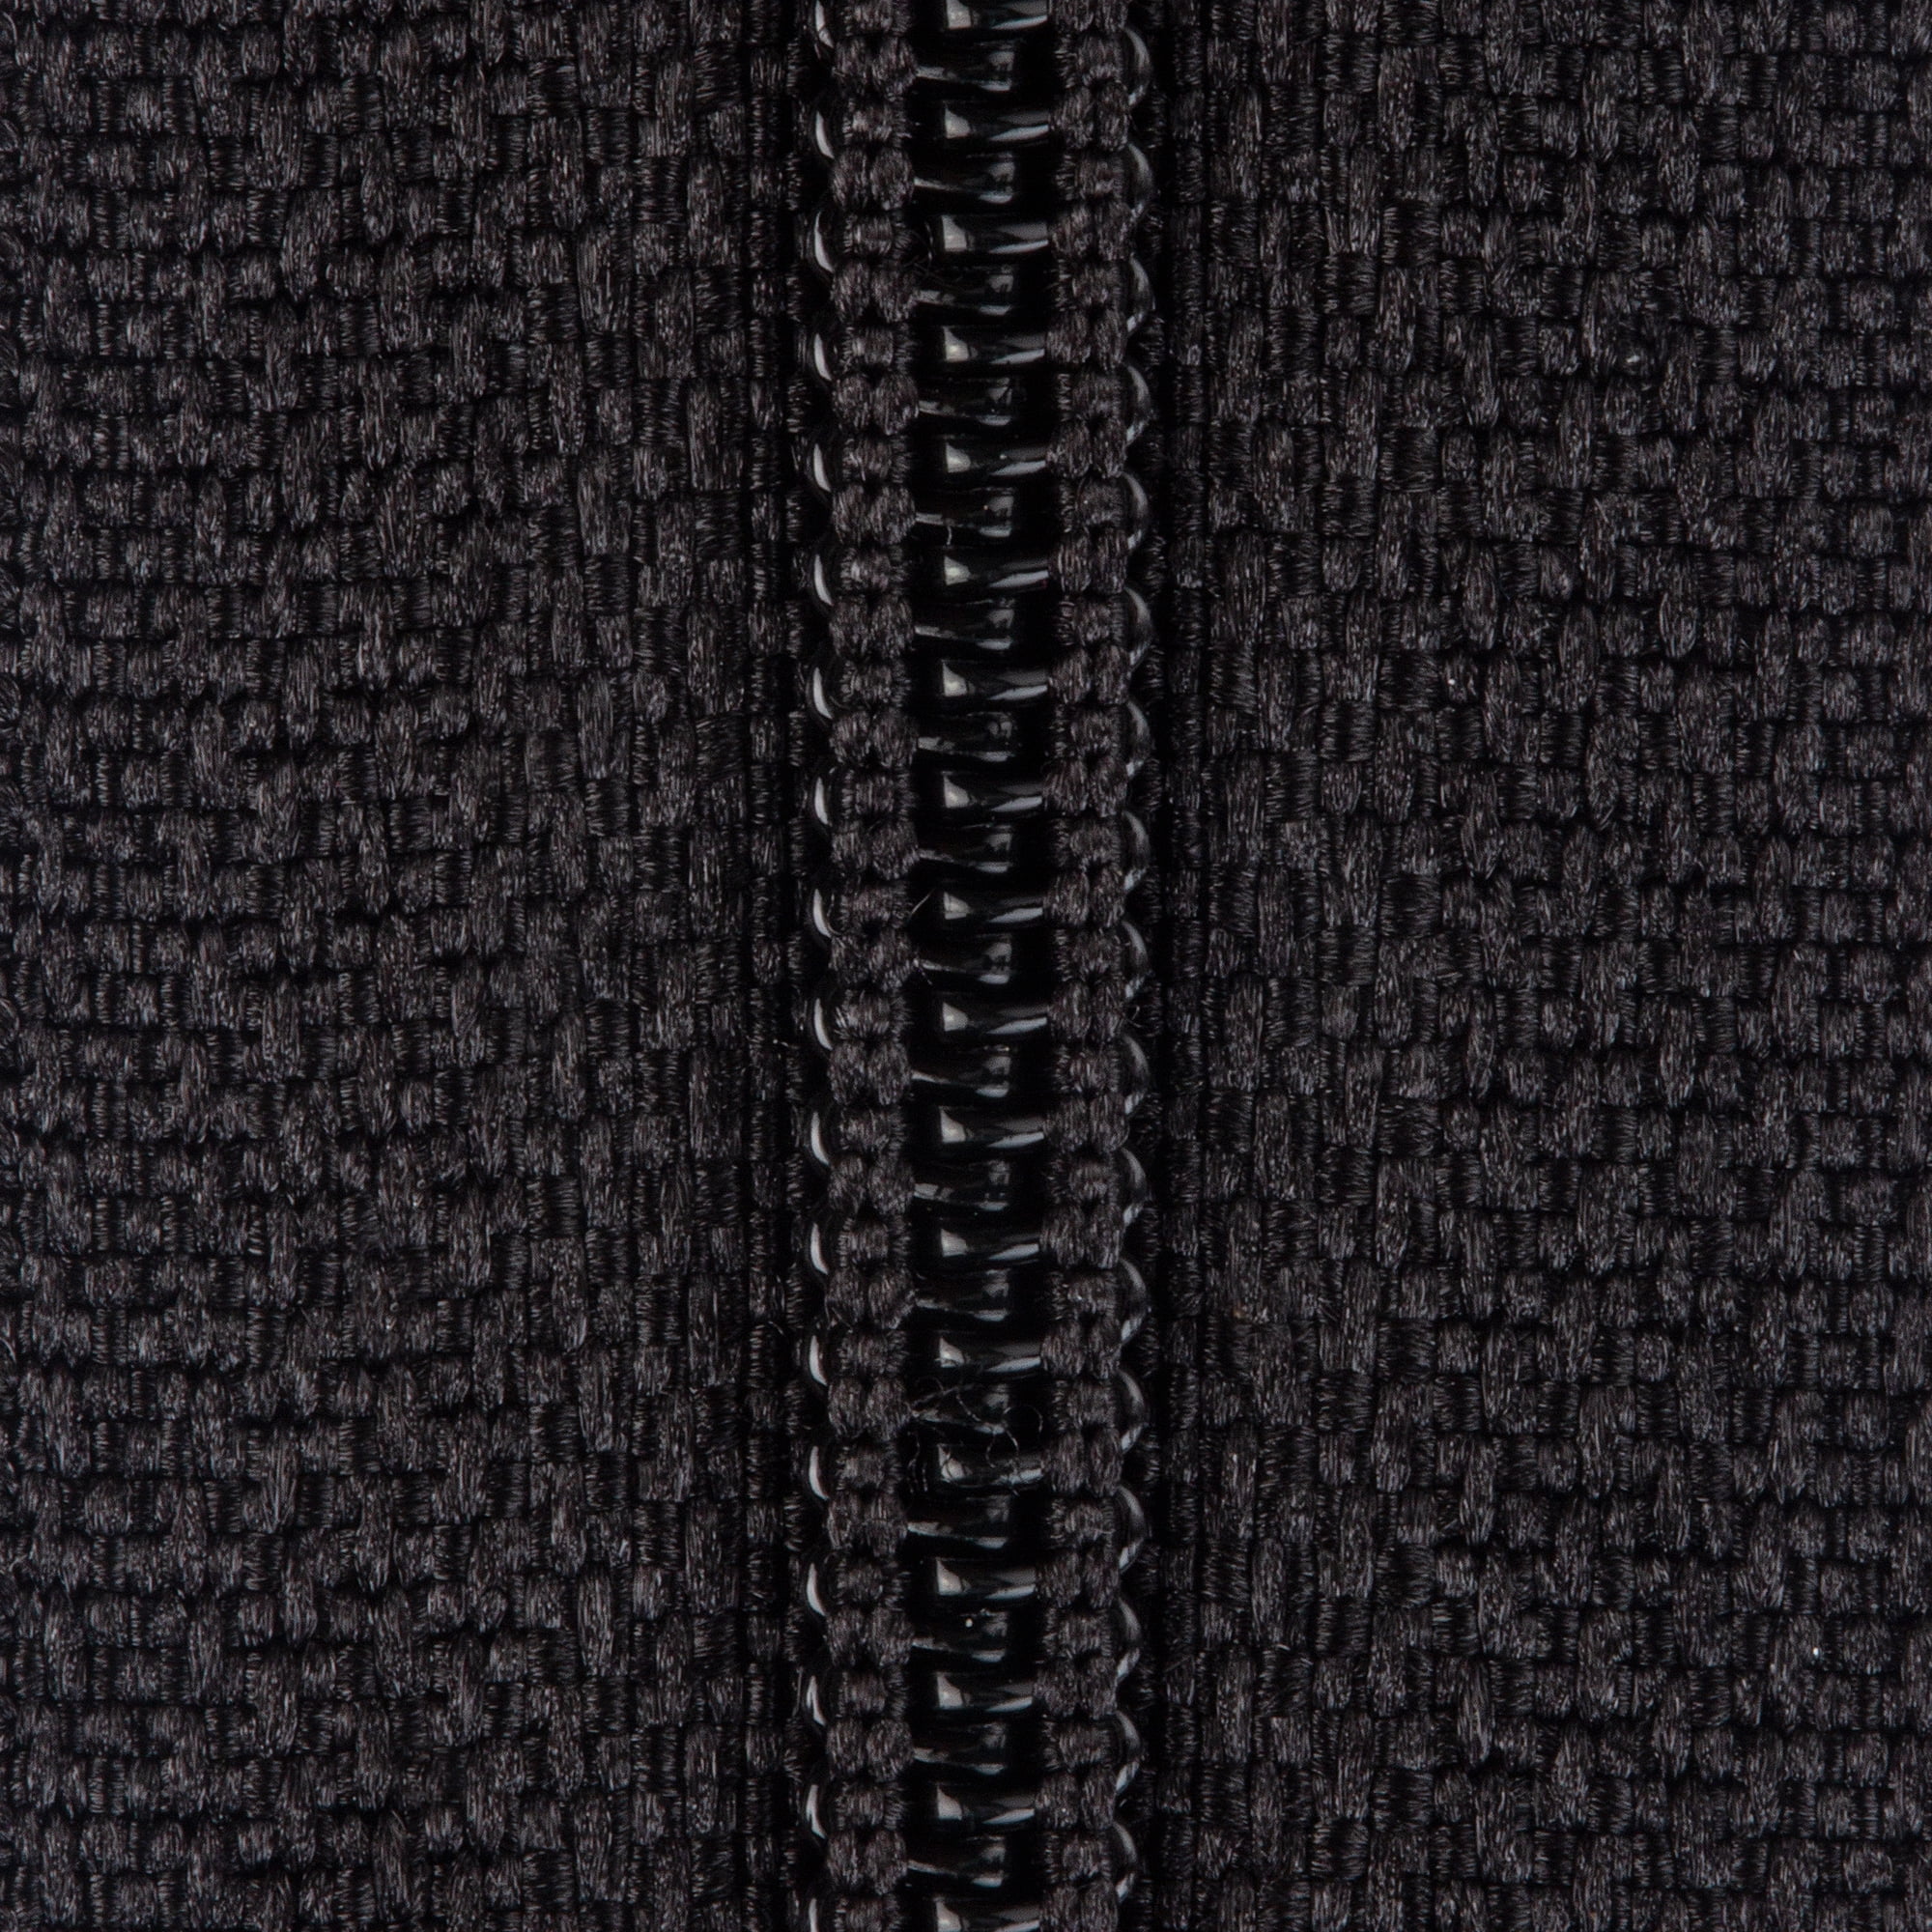 Coats & Clark 9 Polyester All-Purpose Black Zipper, 1 Each